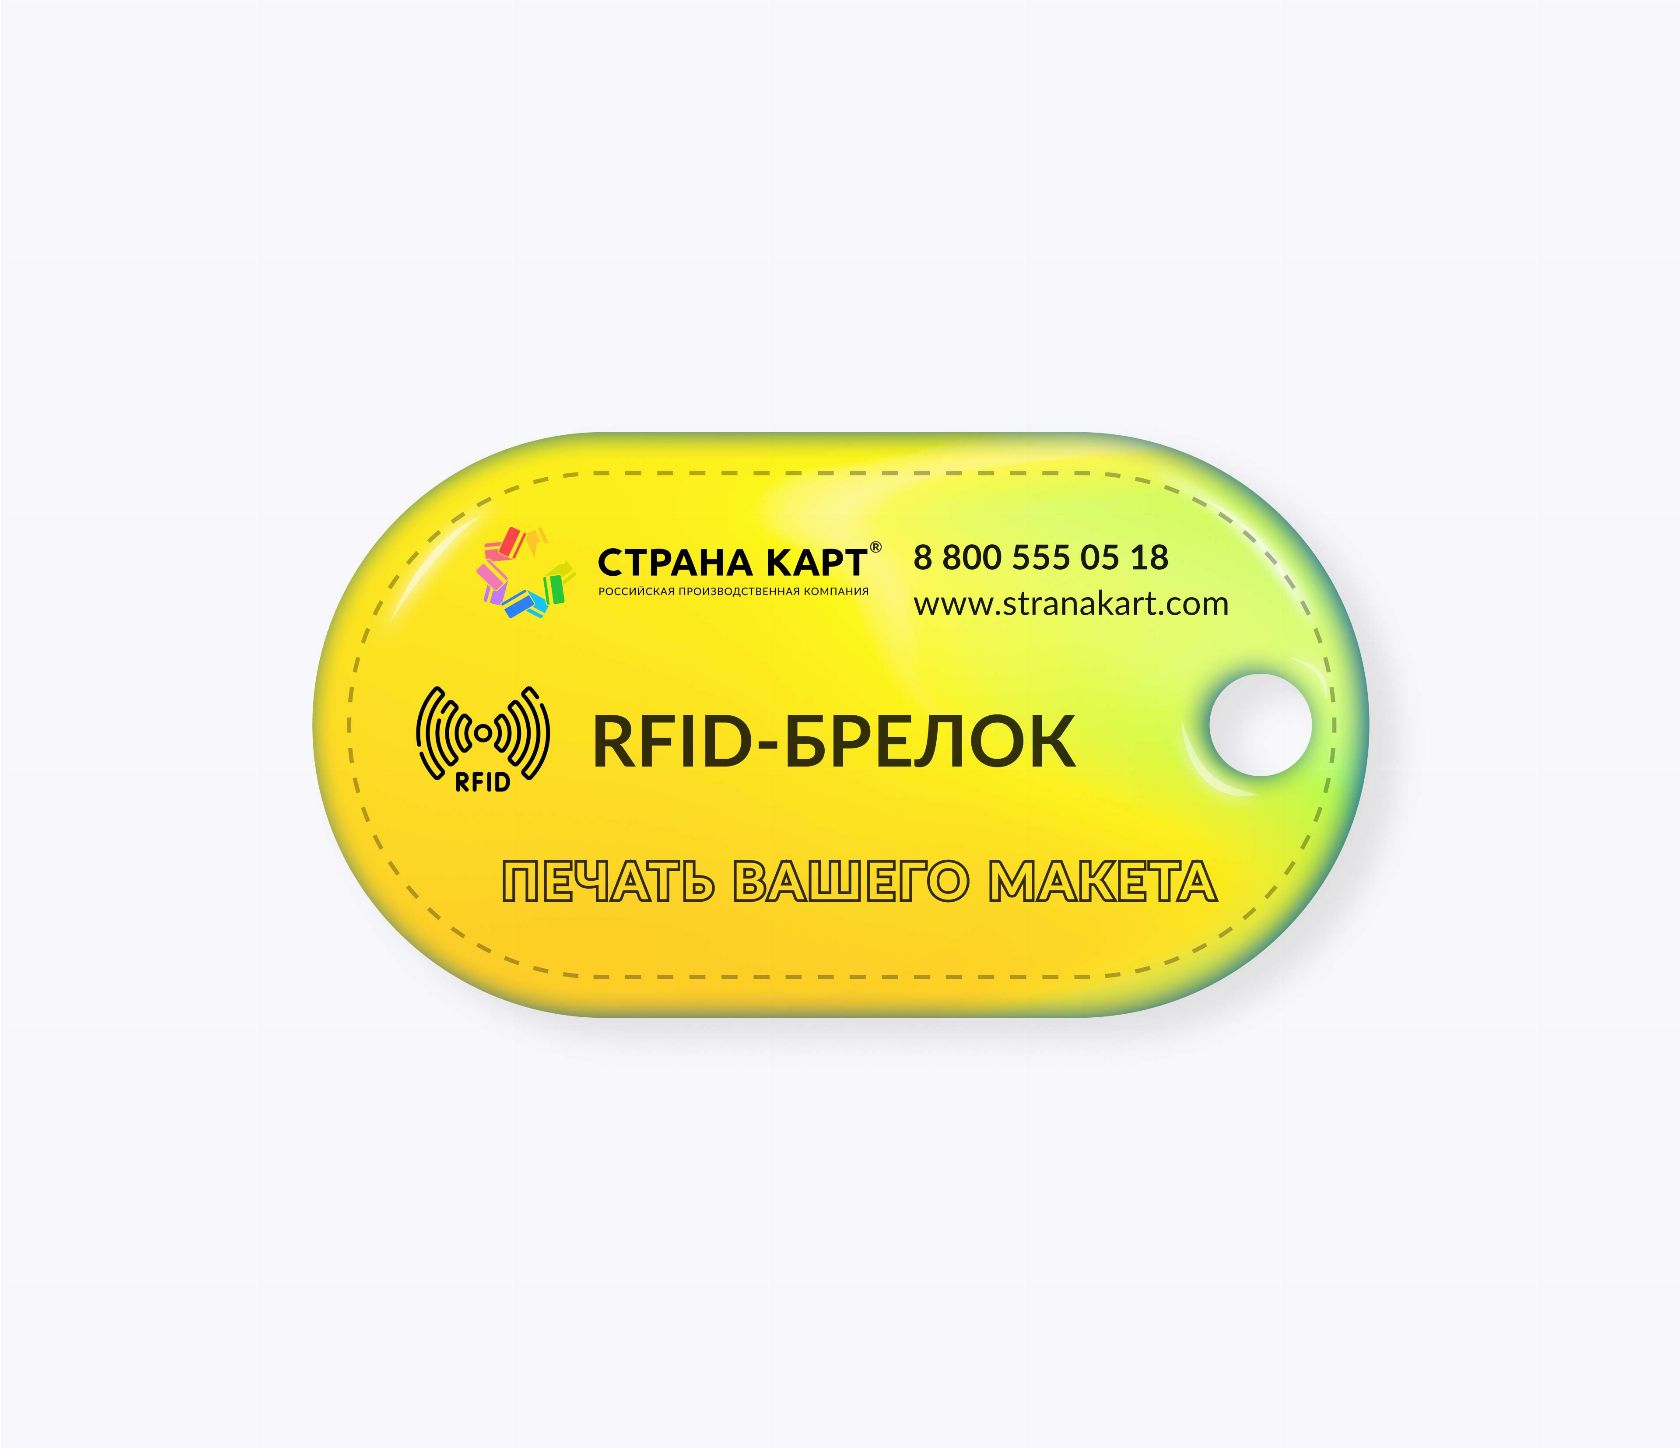 Овальные RFID-брелоки NEOKEY® с чипом NXP MIFARE Classic 1k + EM-Marine Дуальные RFID-брелоки NEOKEY® с двумя чипами NXP MIFARE Classic 1k + EM-Marine и вашим логотипом